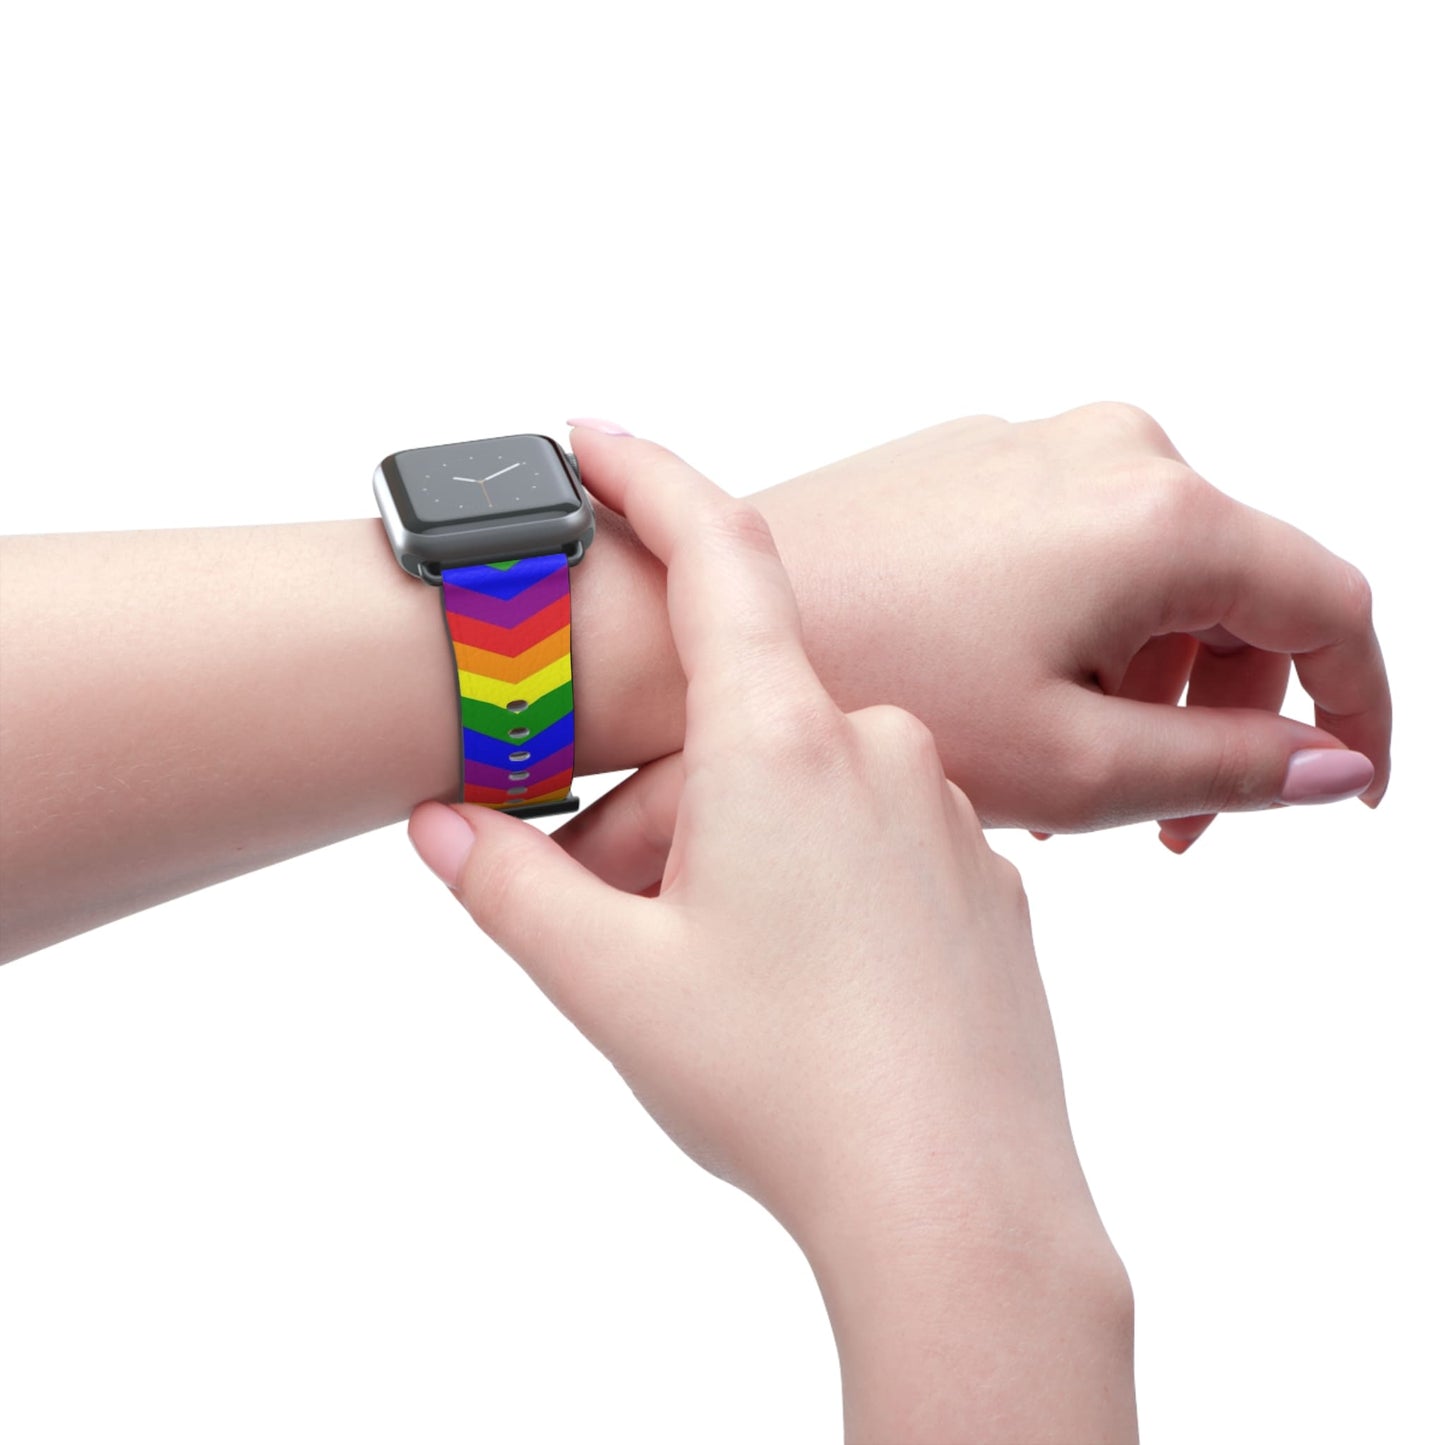 LGBT apple watch band, rainbow chevron pattern, model